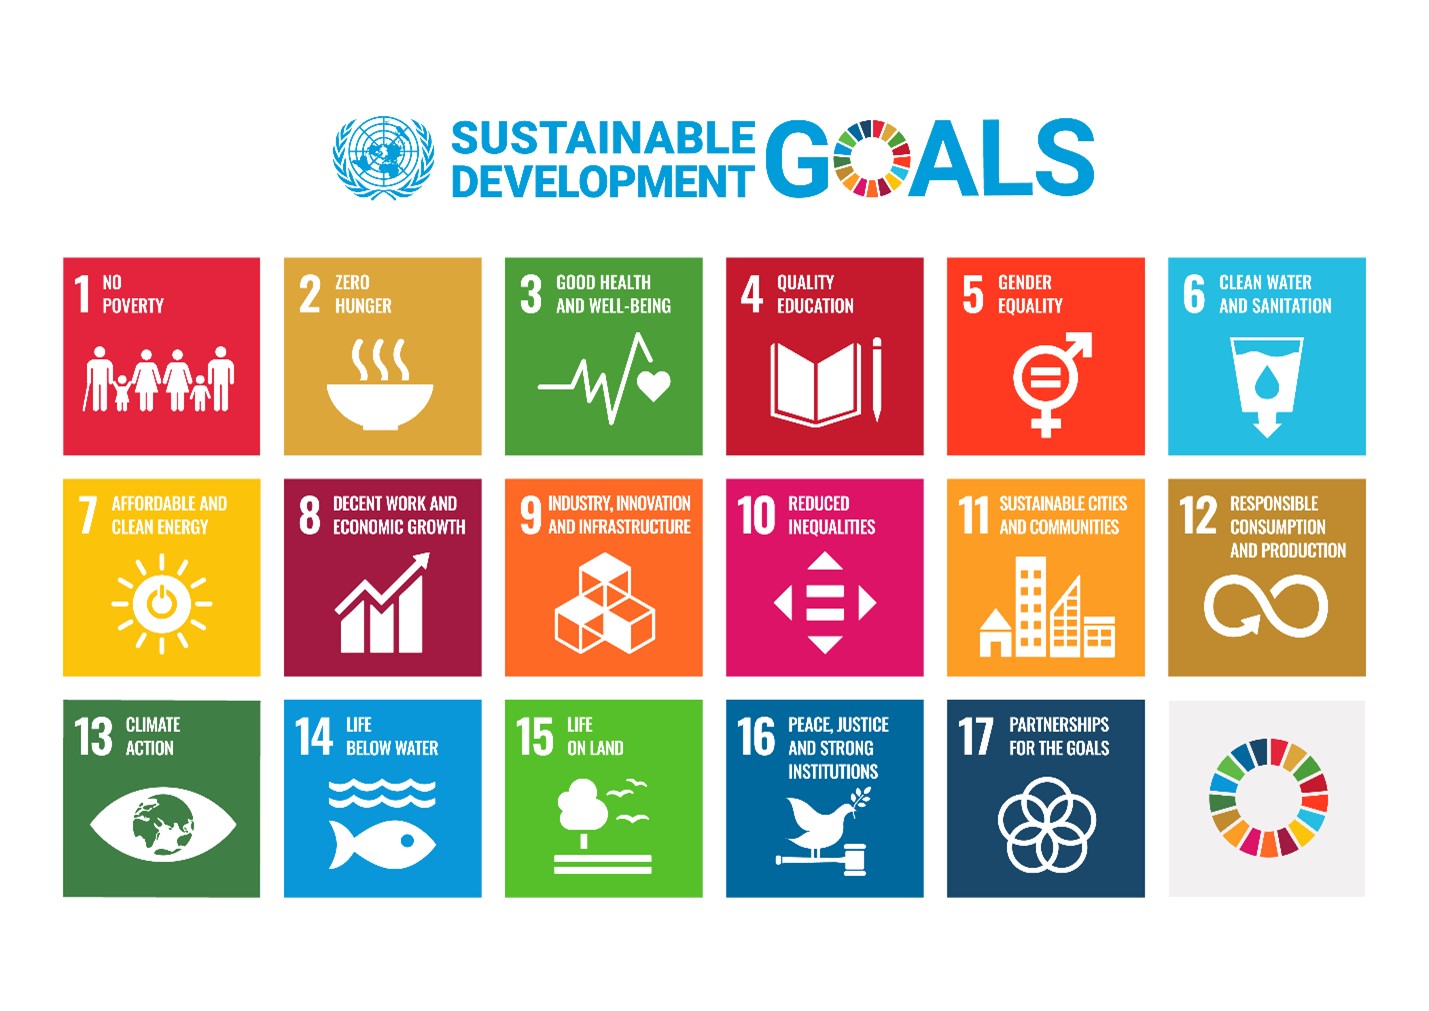 Sustainability Article goals